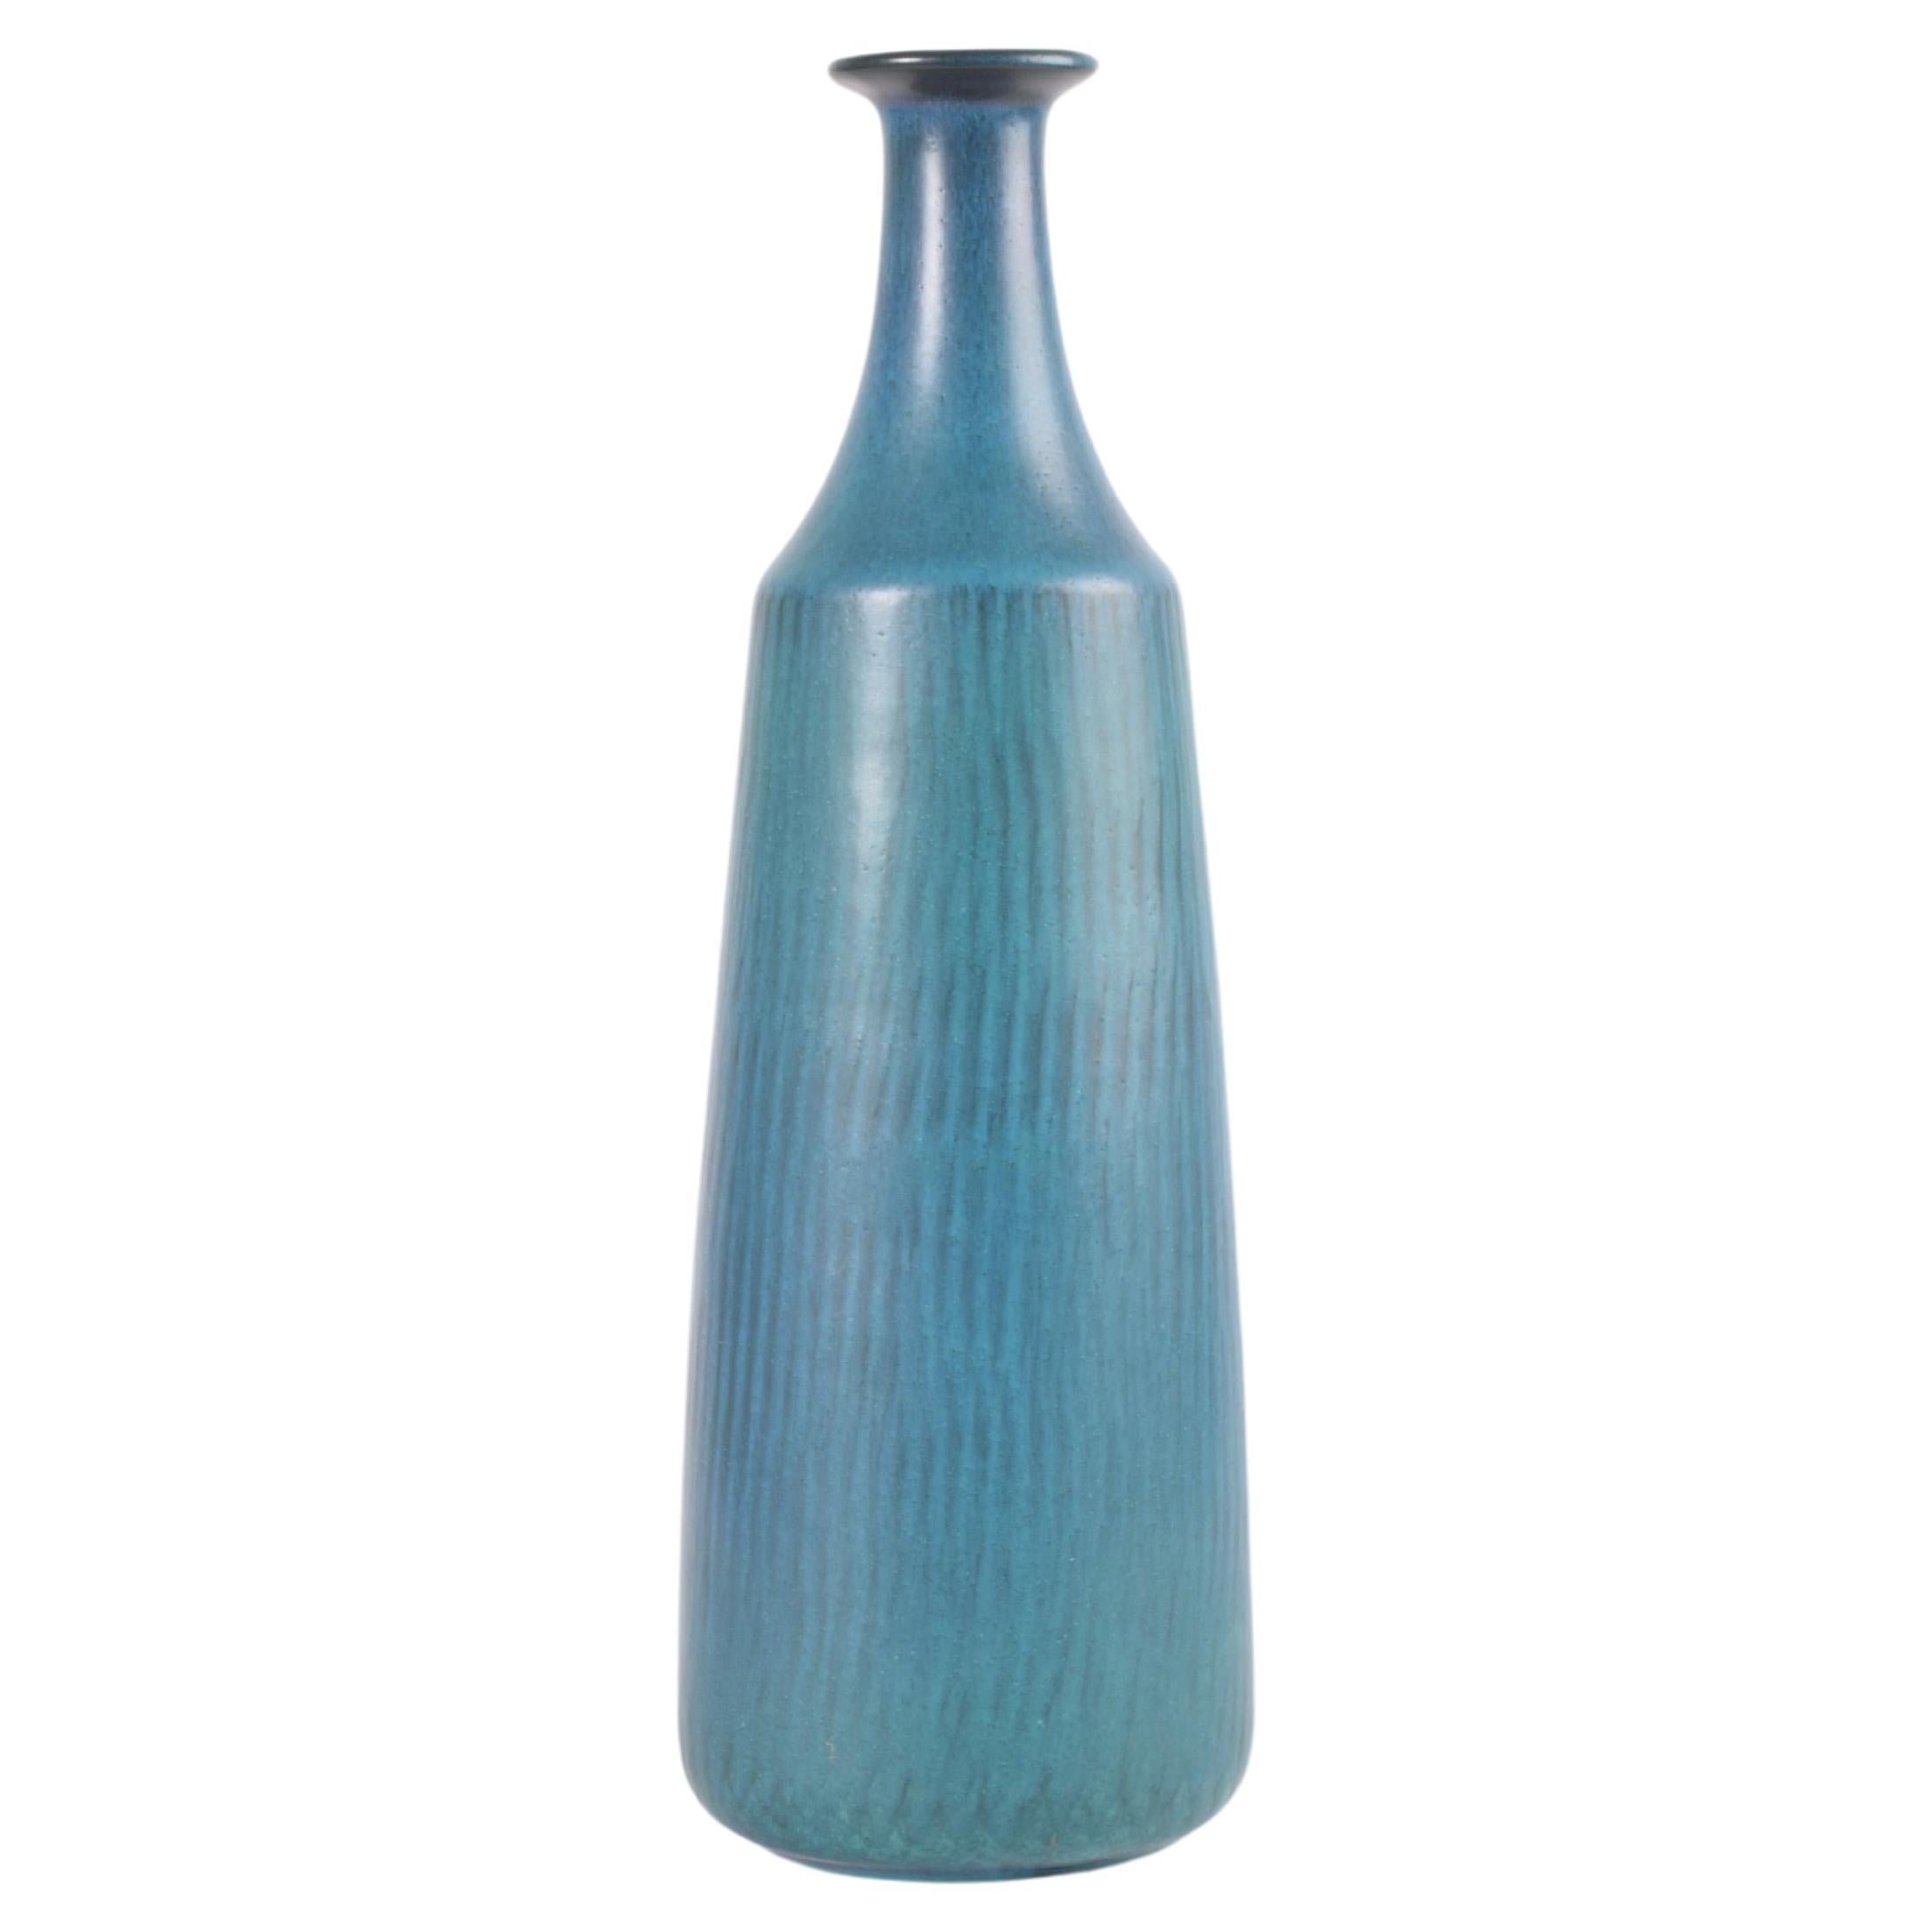 Gunnar Nylund for Nymølle Tall Vase Turquoise Blue, Scandinavian Modernity 1960s